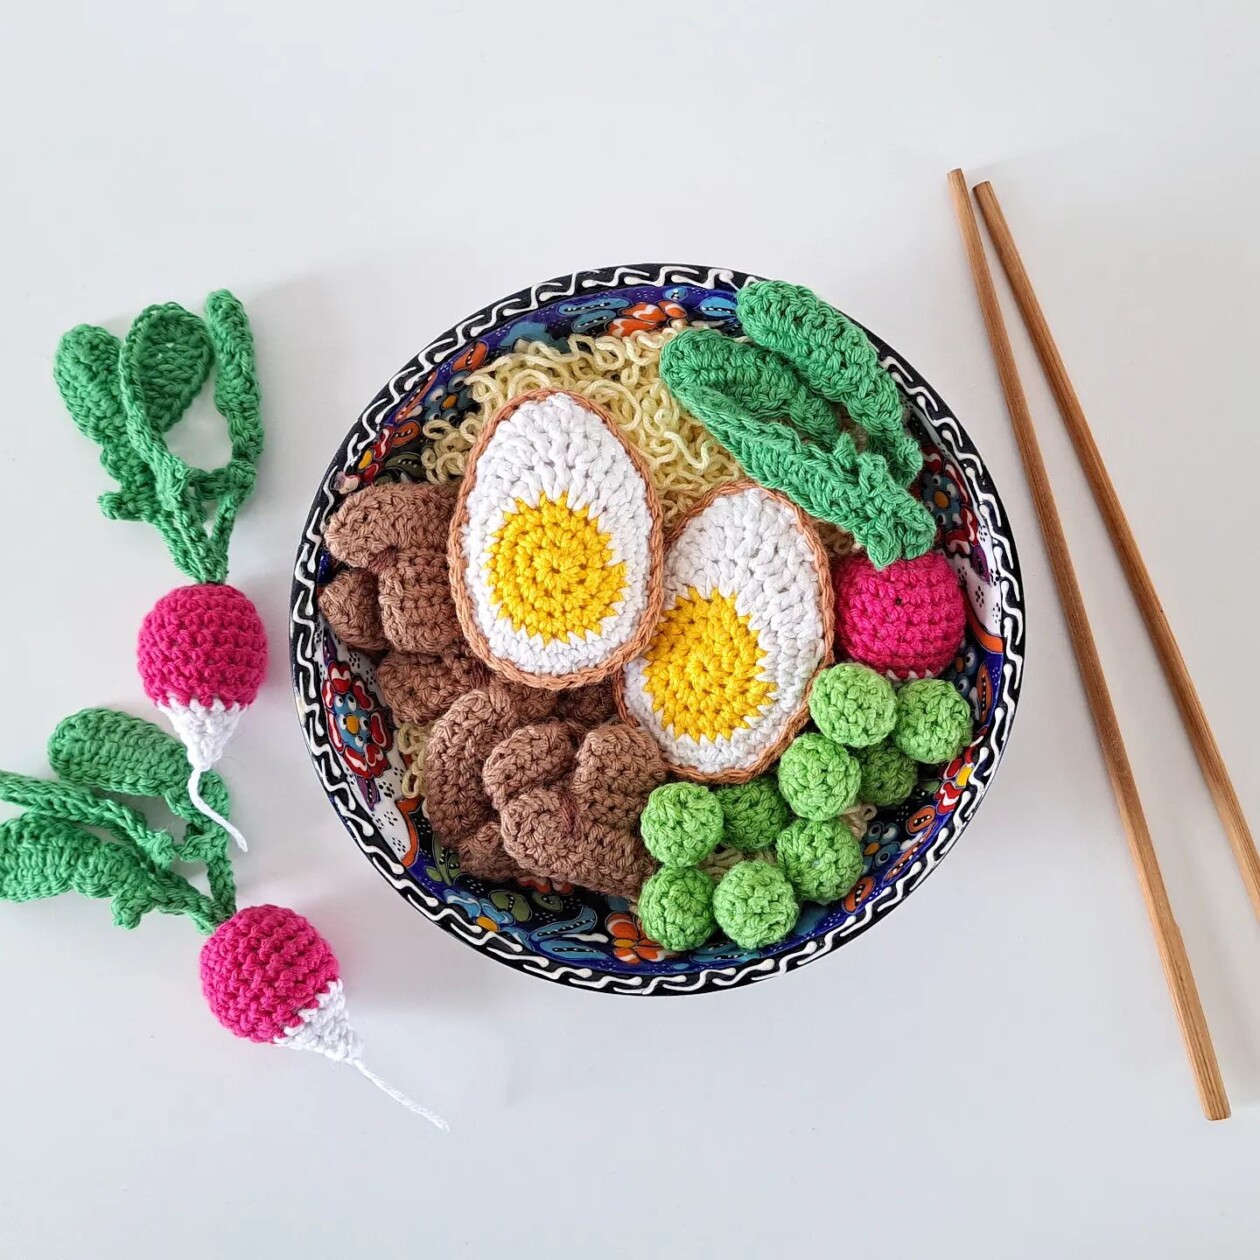 Whimsical Food Crochet Sculptures By Maria Skog (8)